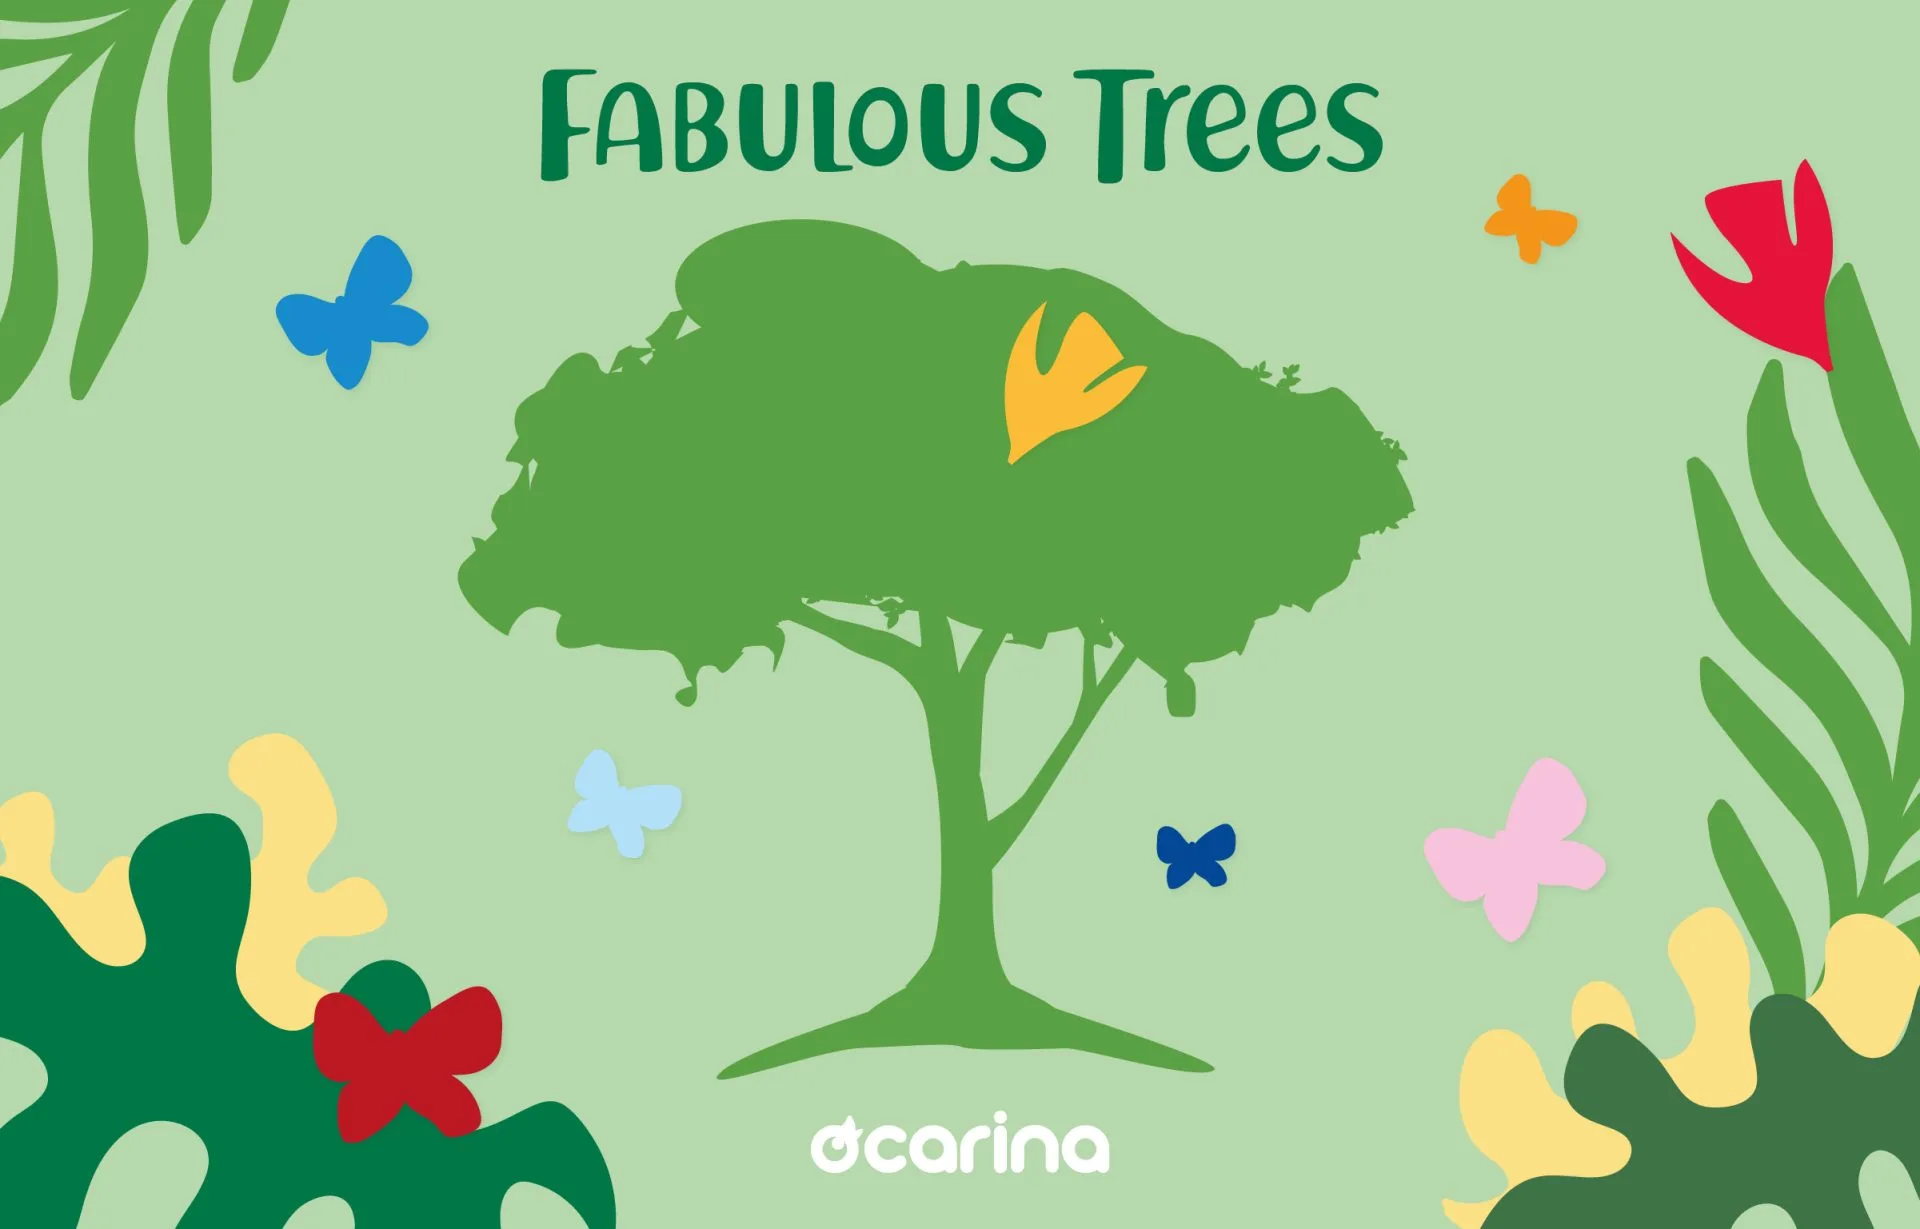 Fabulous Trees Audio Stories